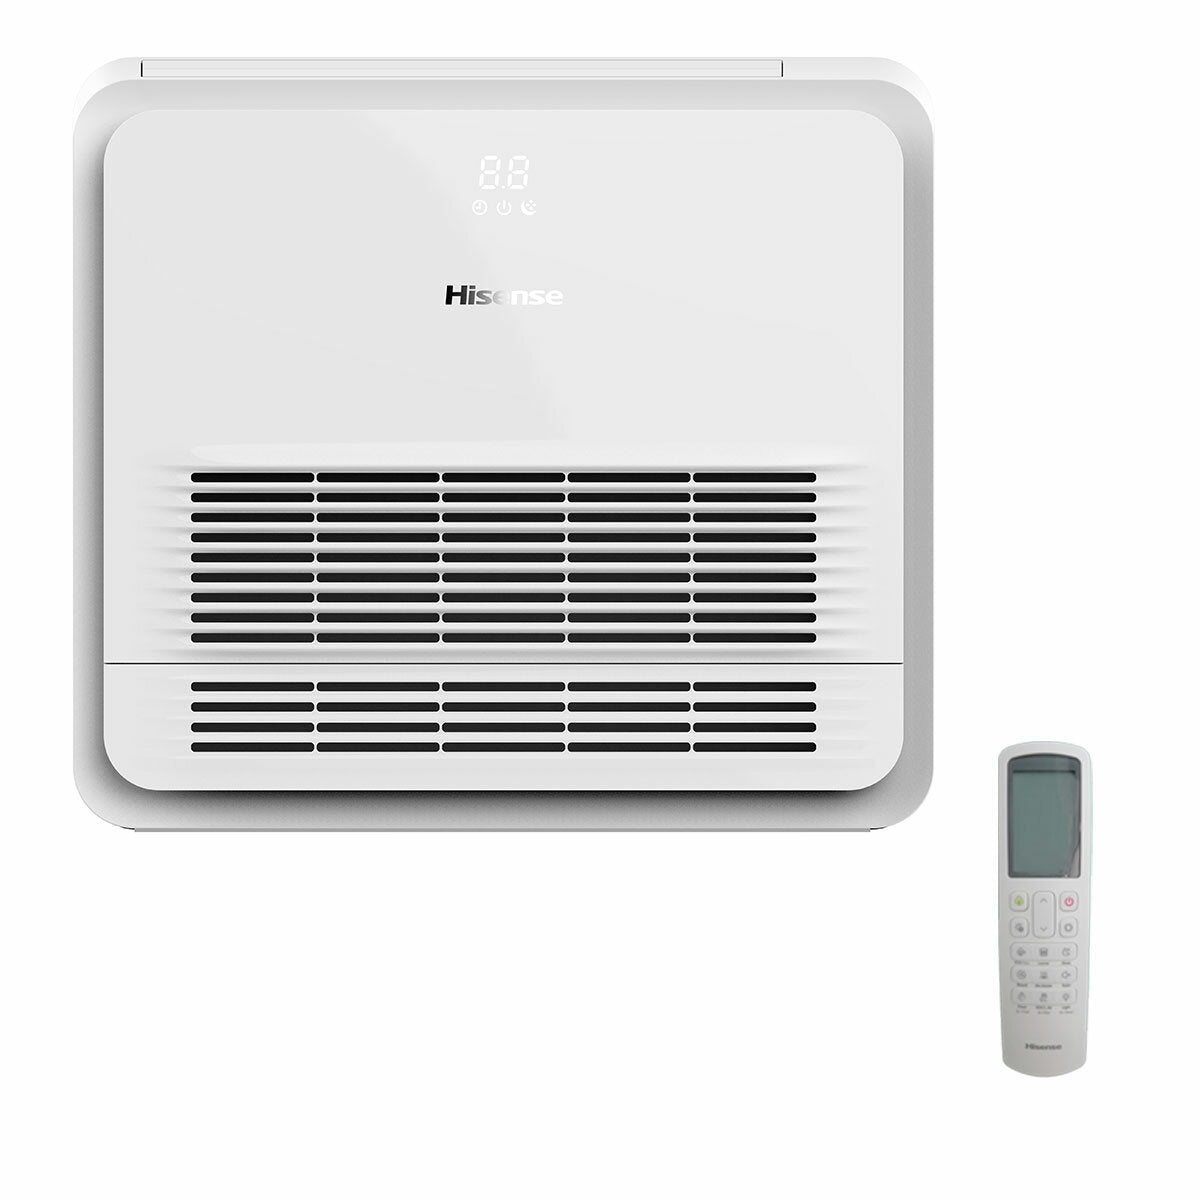 Hisense Console AKT dual split air conditioner 9000+12000 BTU inverter A++ outdoor unit 5 kW